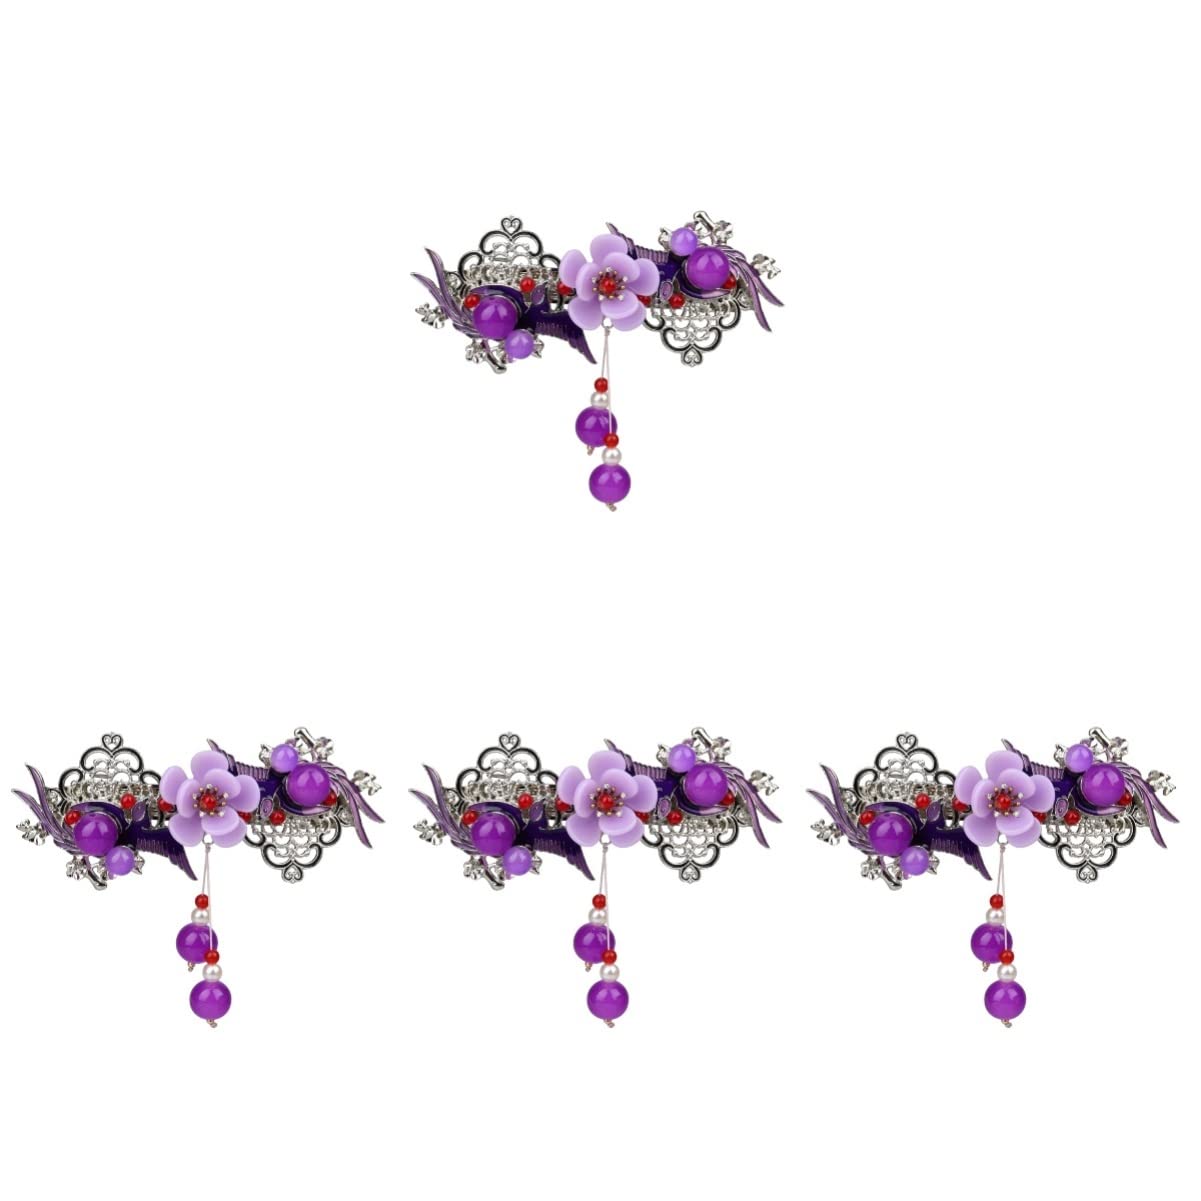 SHUBIAO 6 Stück Vintage Dekorative Blume Blume Haarspangen for Frauen Dekorative Haarspangen Haarschmuck for Frauen Haarspange Quaste Haarspangen (Color : Purplex3pcs, Size : 8.6X3.8X2.5CMx6pcs)